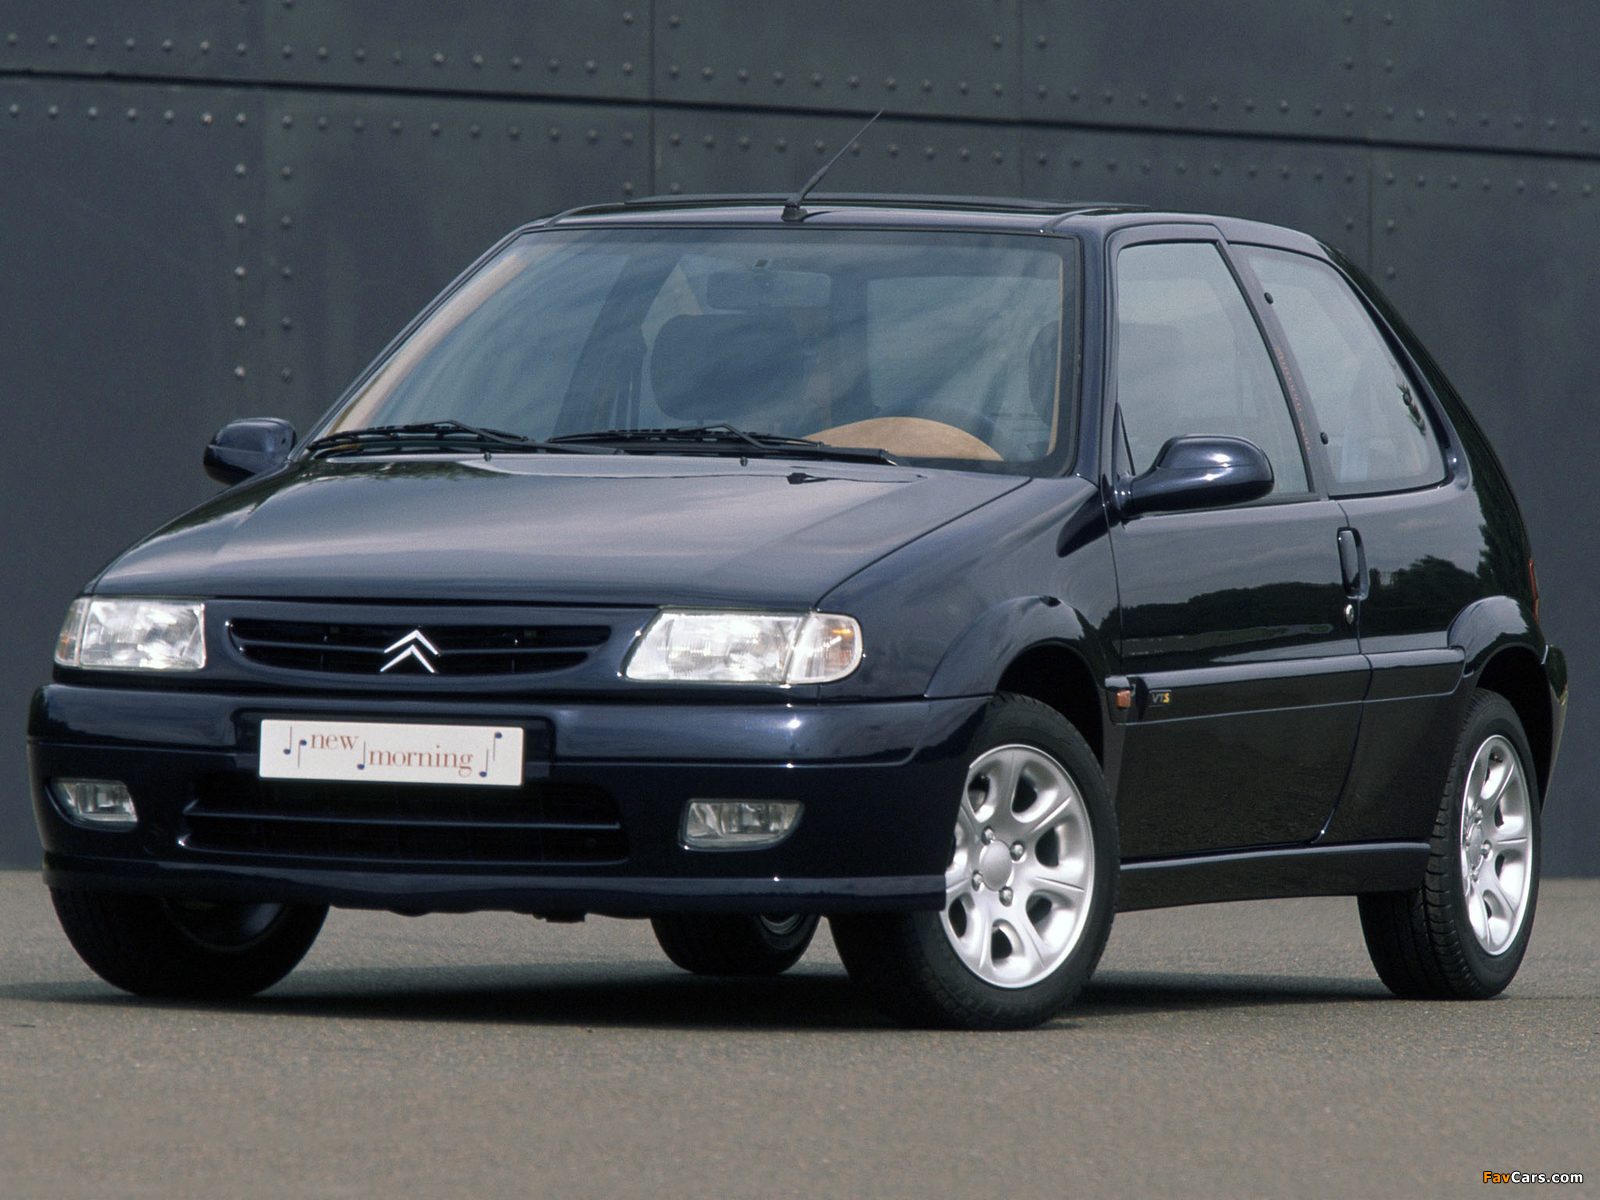 Citroën Saxo VTS New Morning 1998 photos (1600 x 1200)